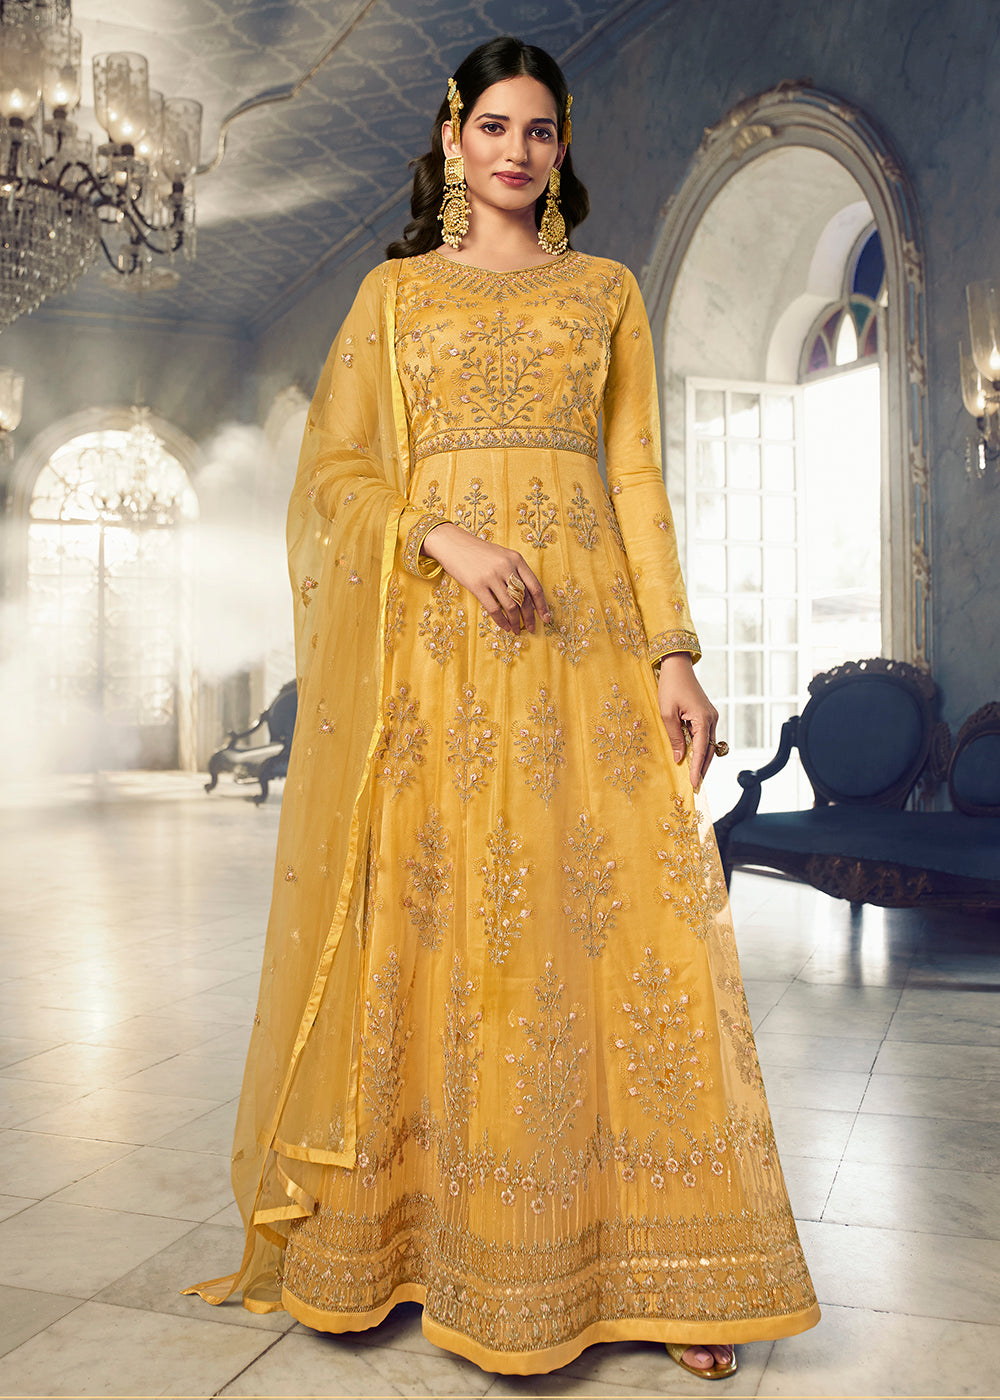 Buy Now Pretty Yellow Wedding Party Net Designer Anarkali Suit Online in USA, UK, Australia, New Zealand, Canada & Worldwide at Empress Clothing. 